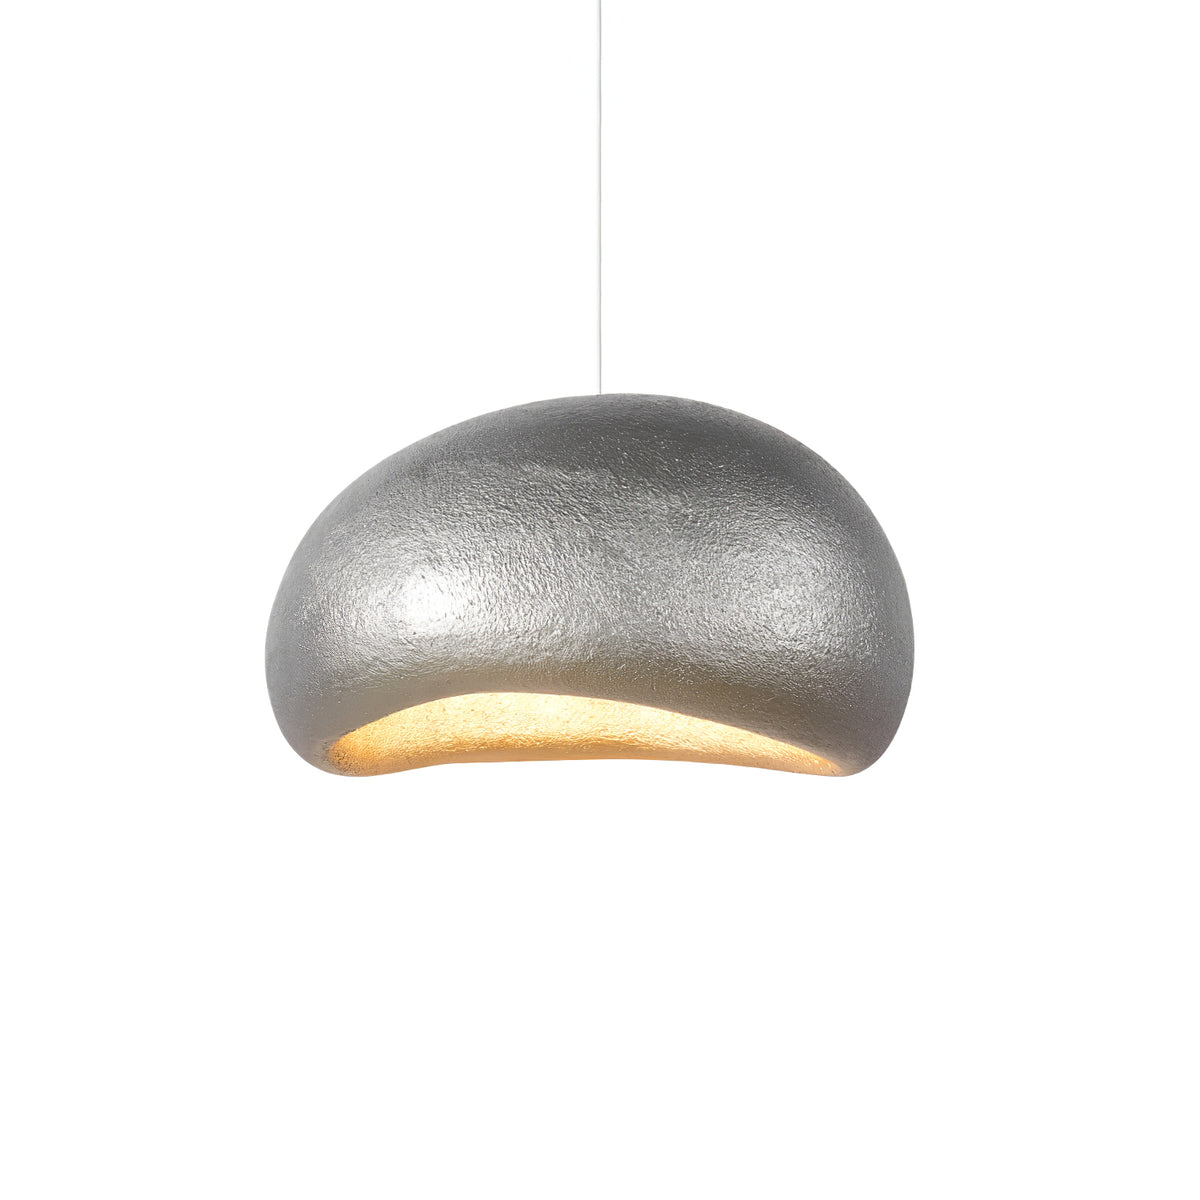 Wabi-sabi style High Density Polyethylene silver pendant light